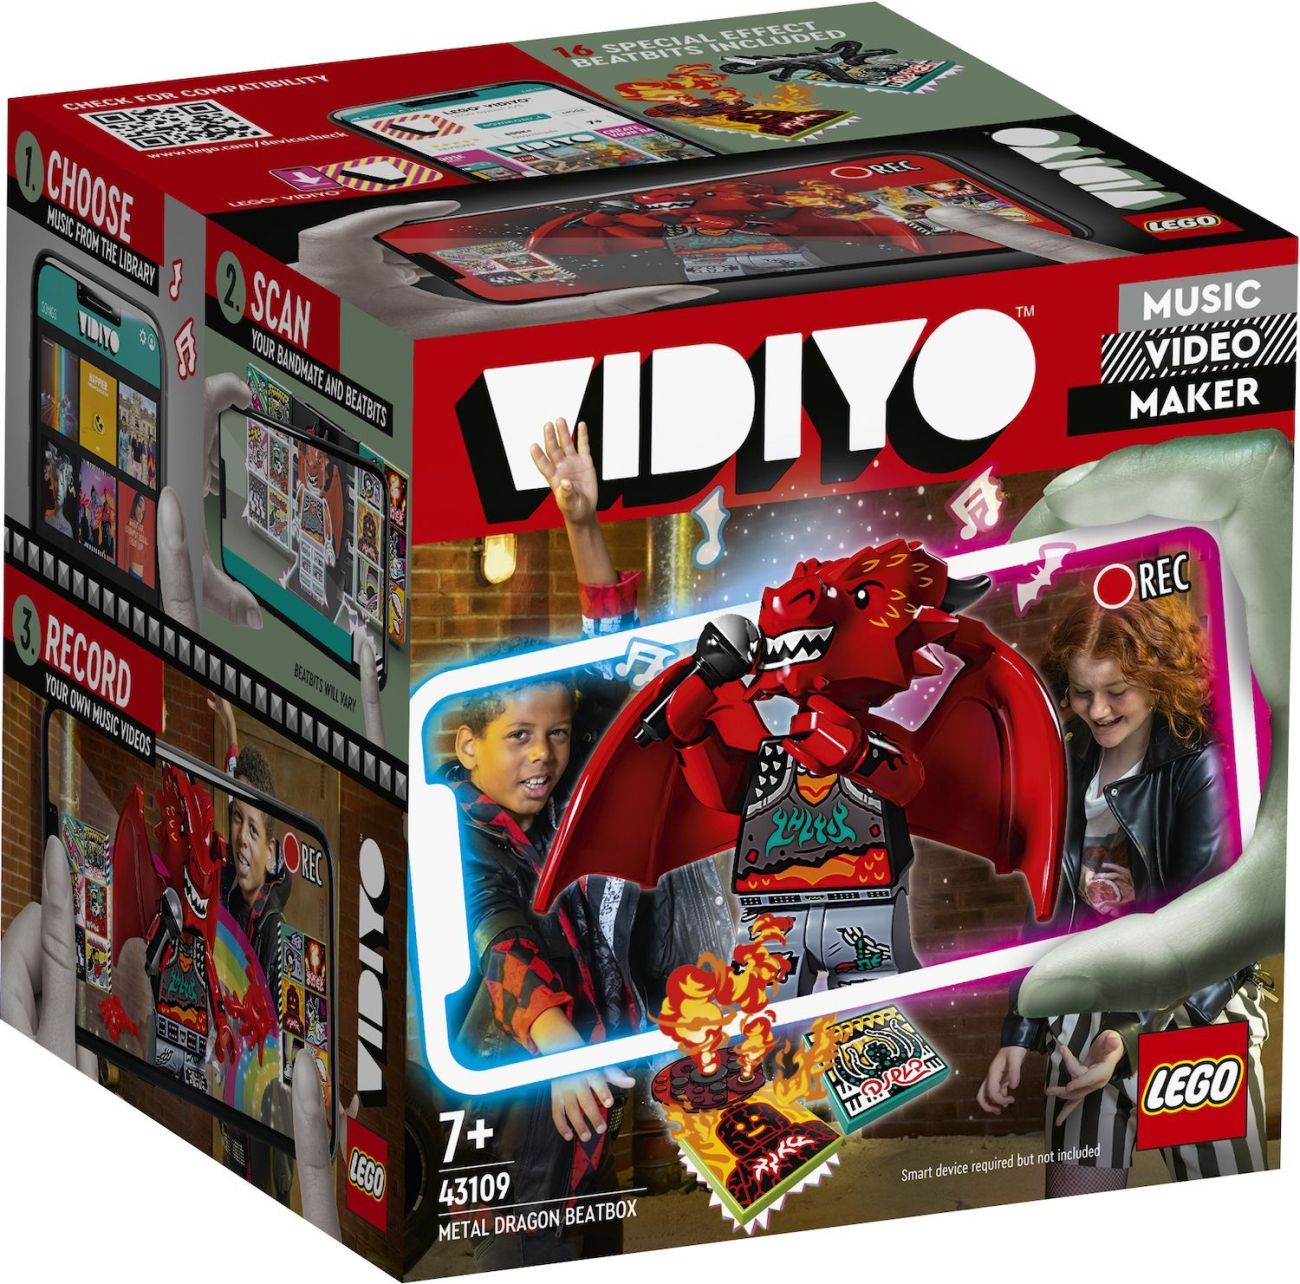 LEGO Vidiyo offiziell vorgestellt: Im März geht es los